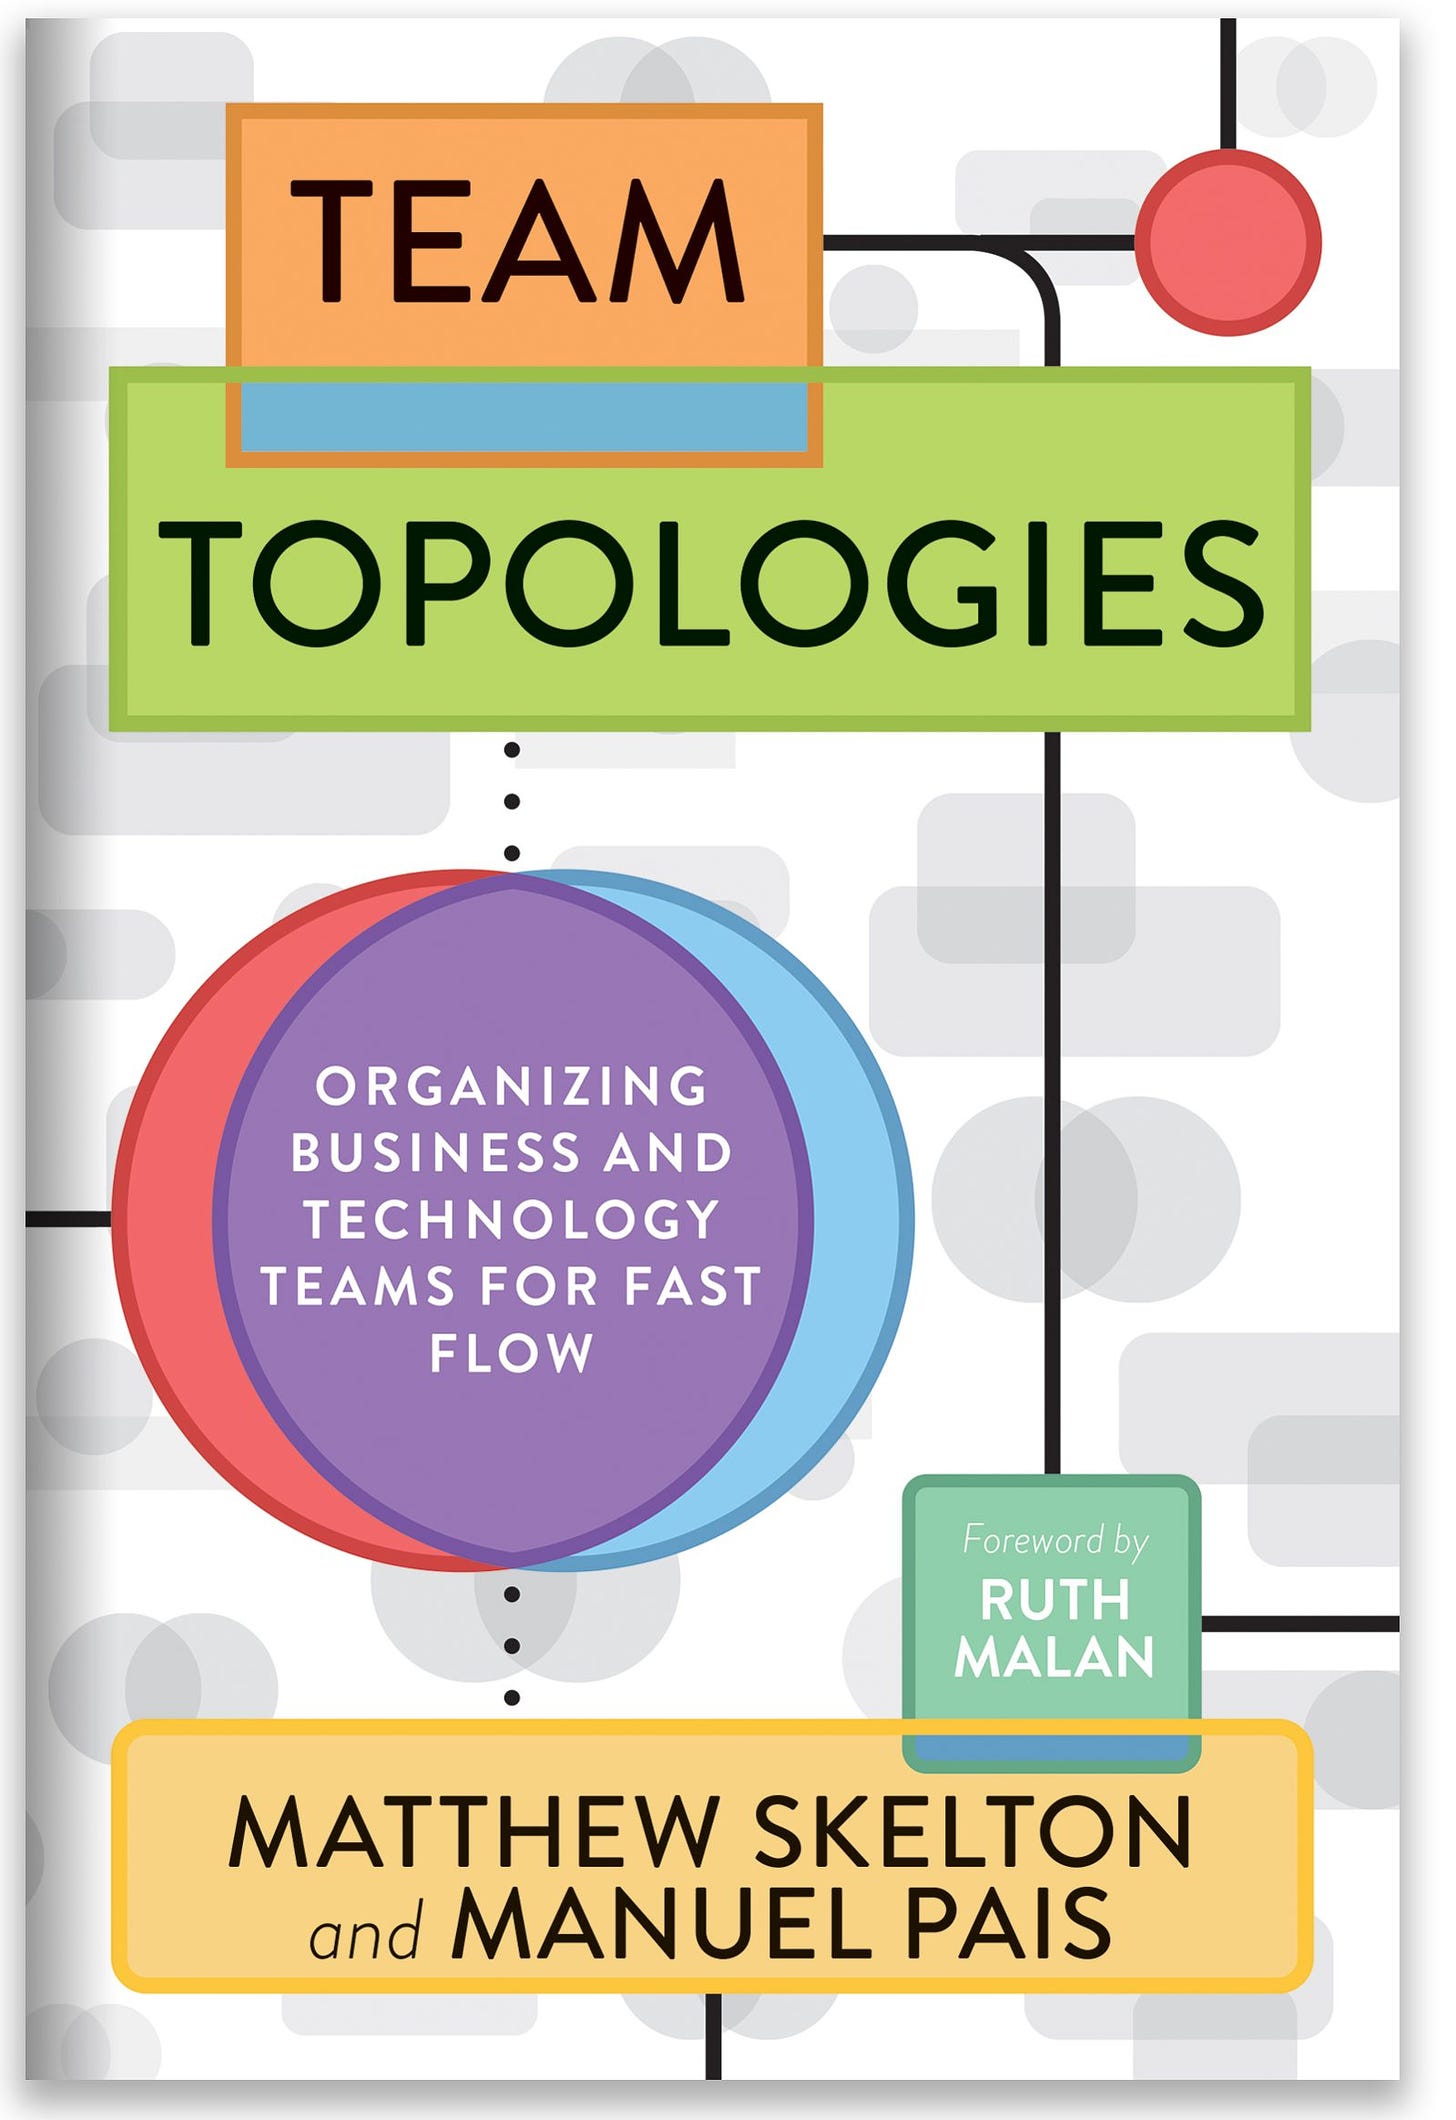 Team Topologies | by Matthew Skelton & Manuel Pais